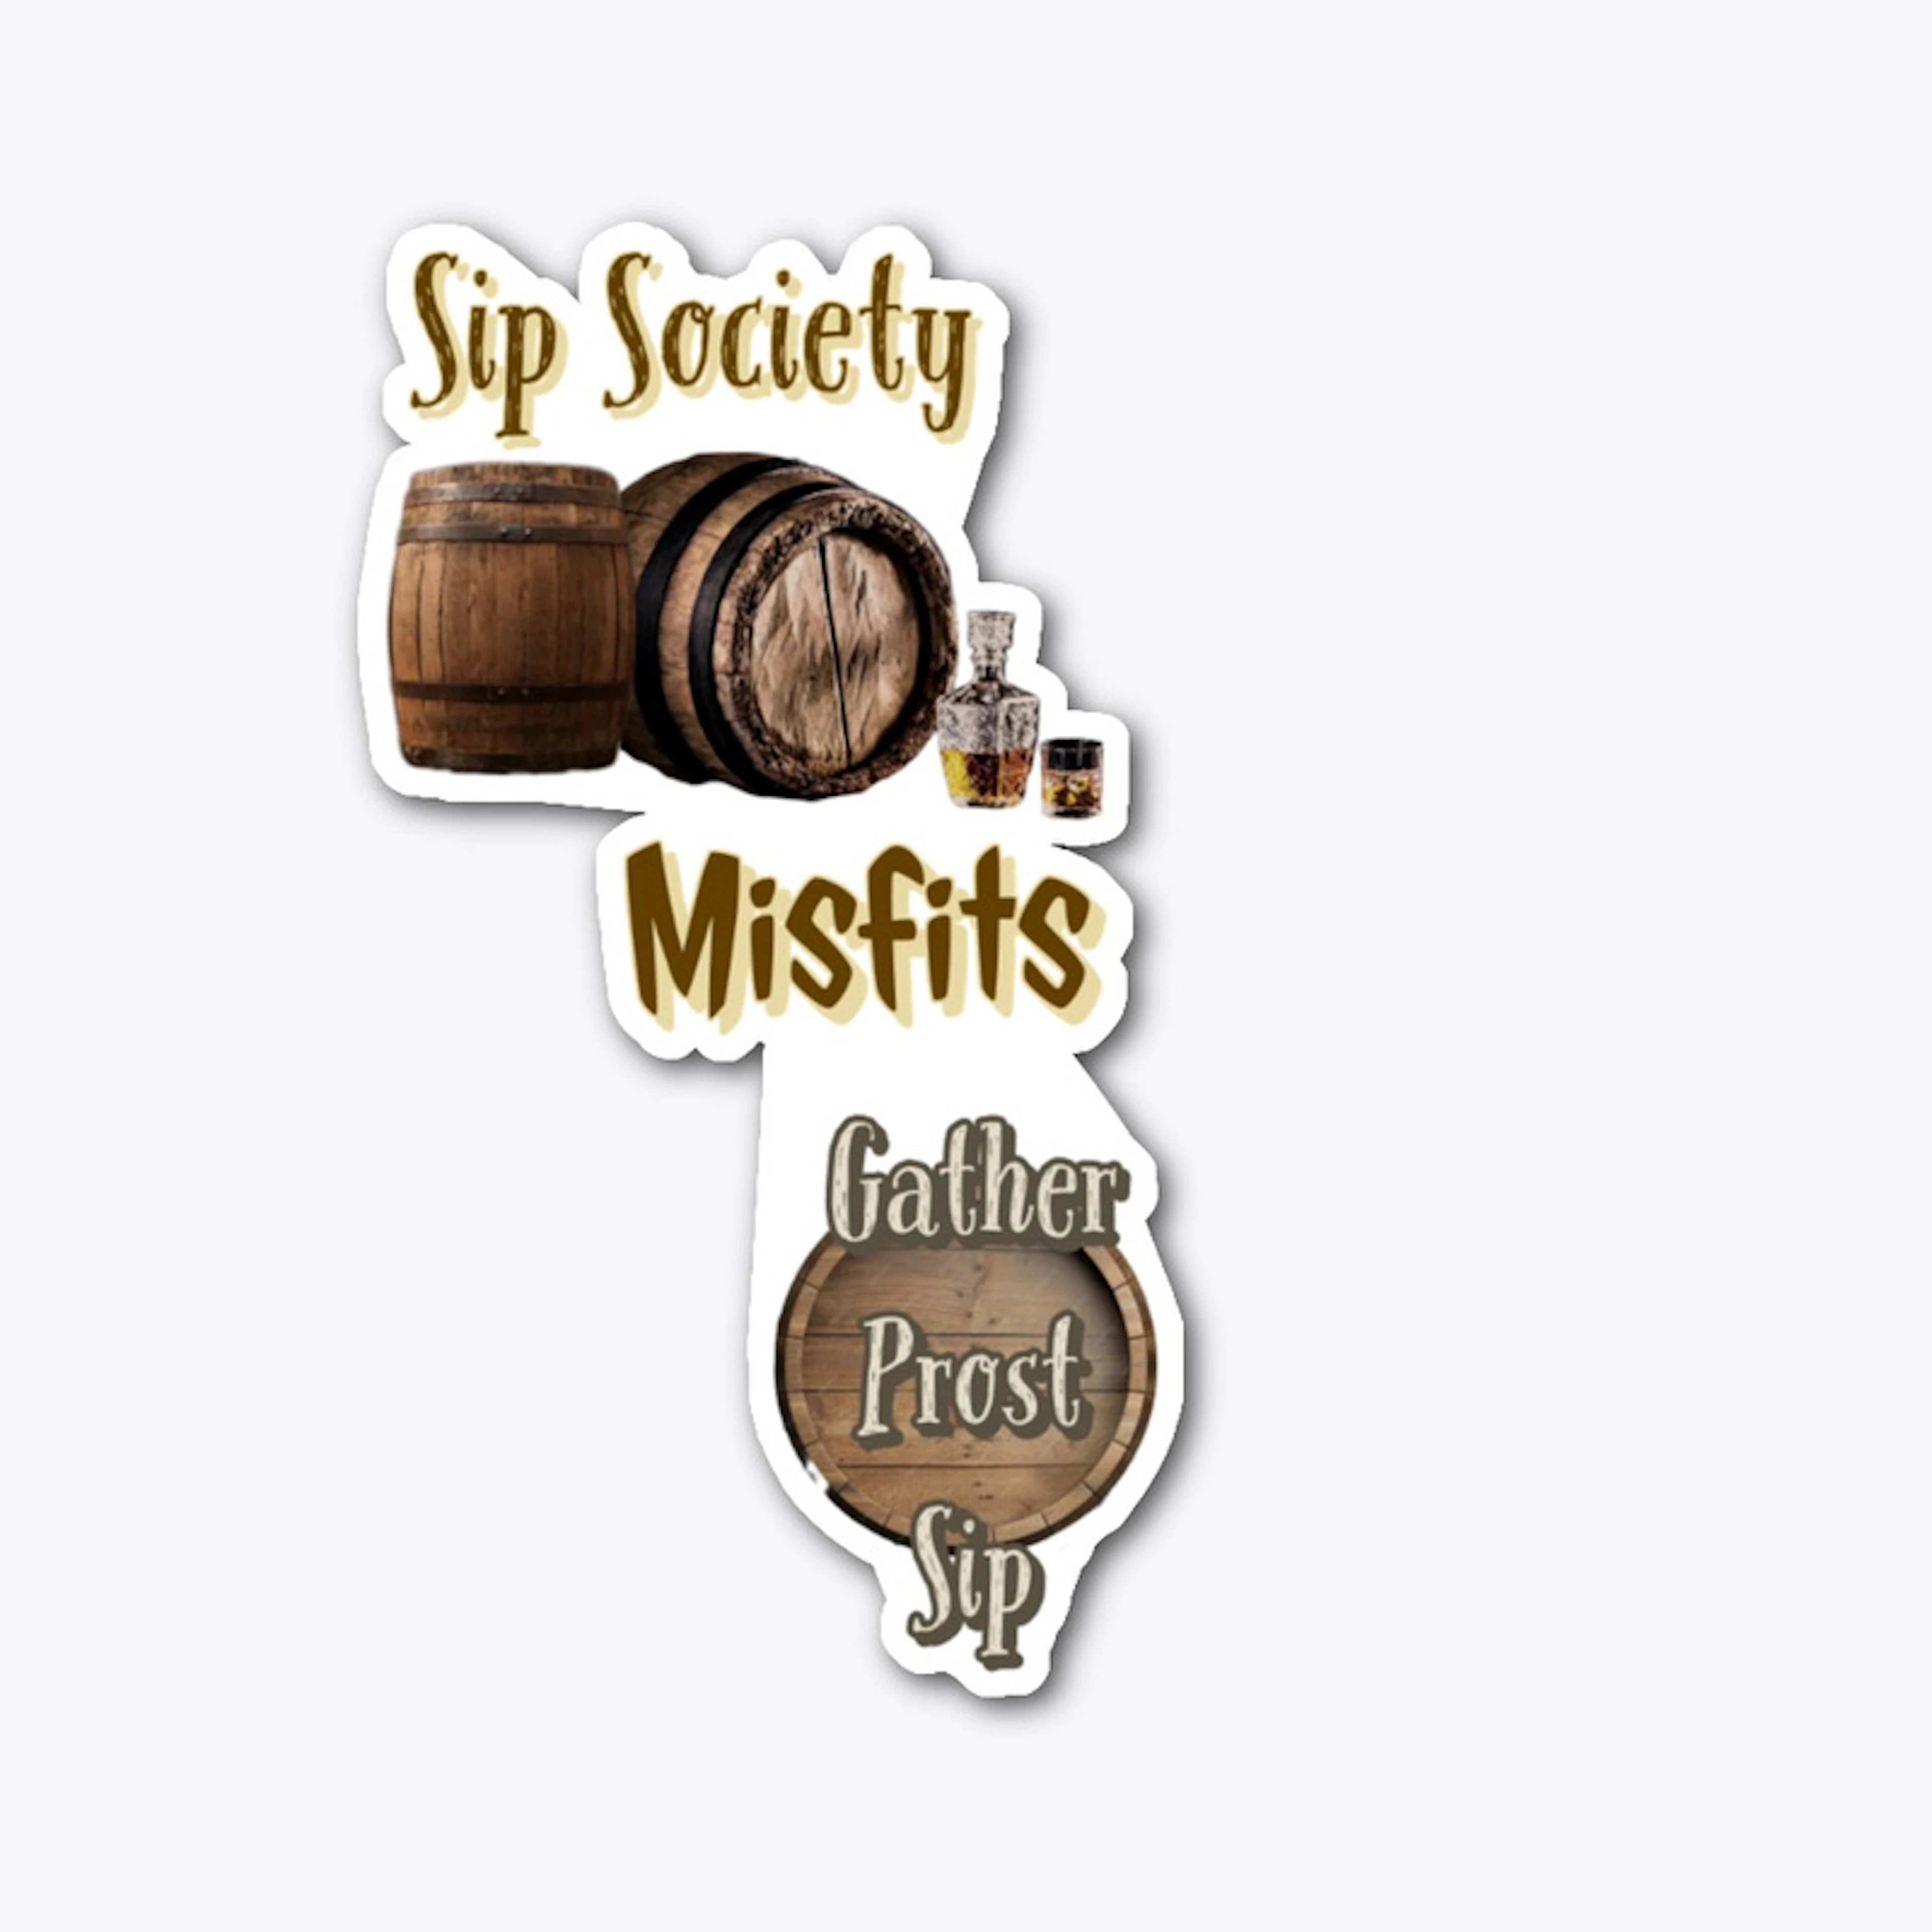 Sip Society Misfits  <sipfits>